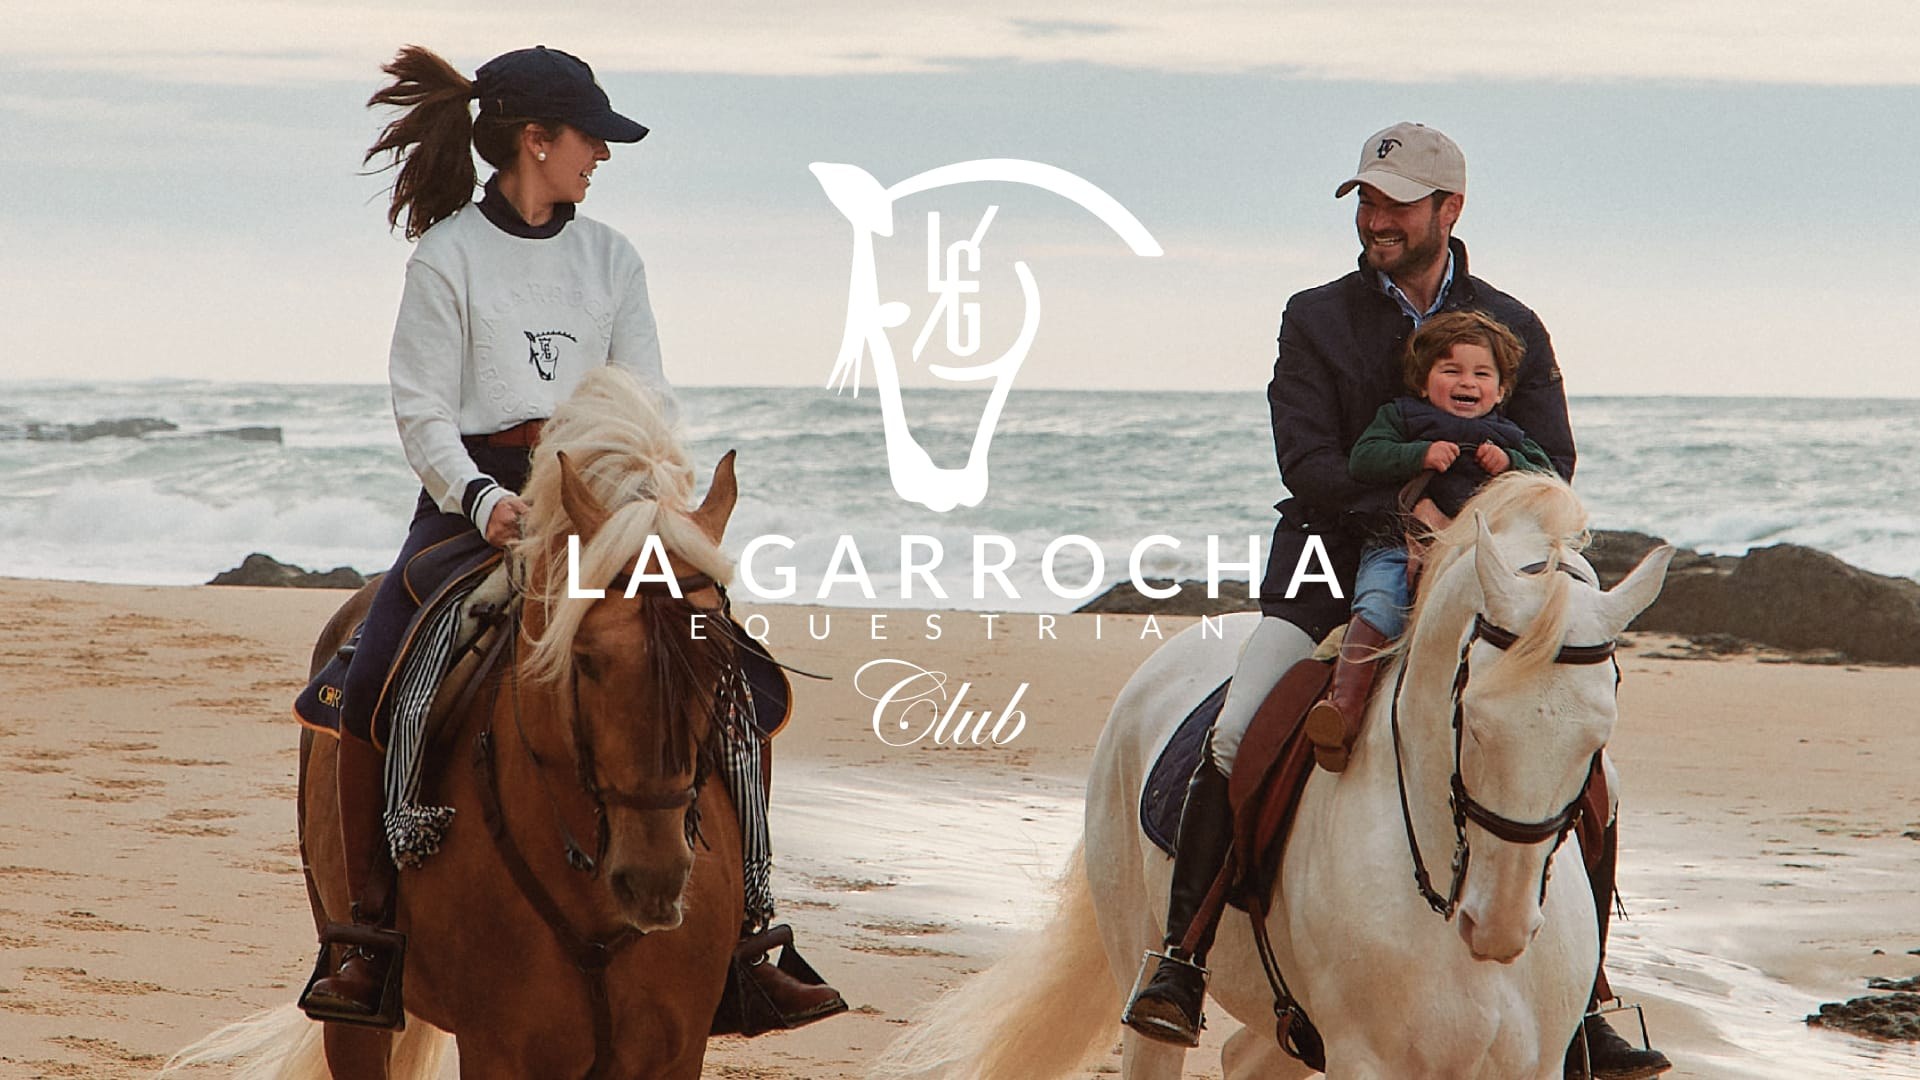 Junte-se ao Clube La Garrocha